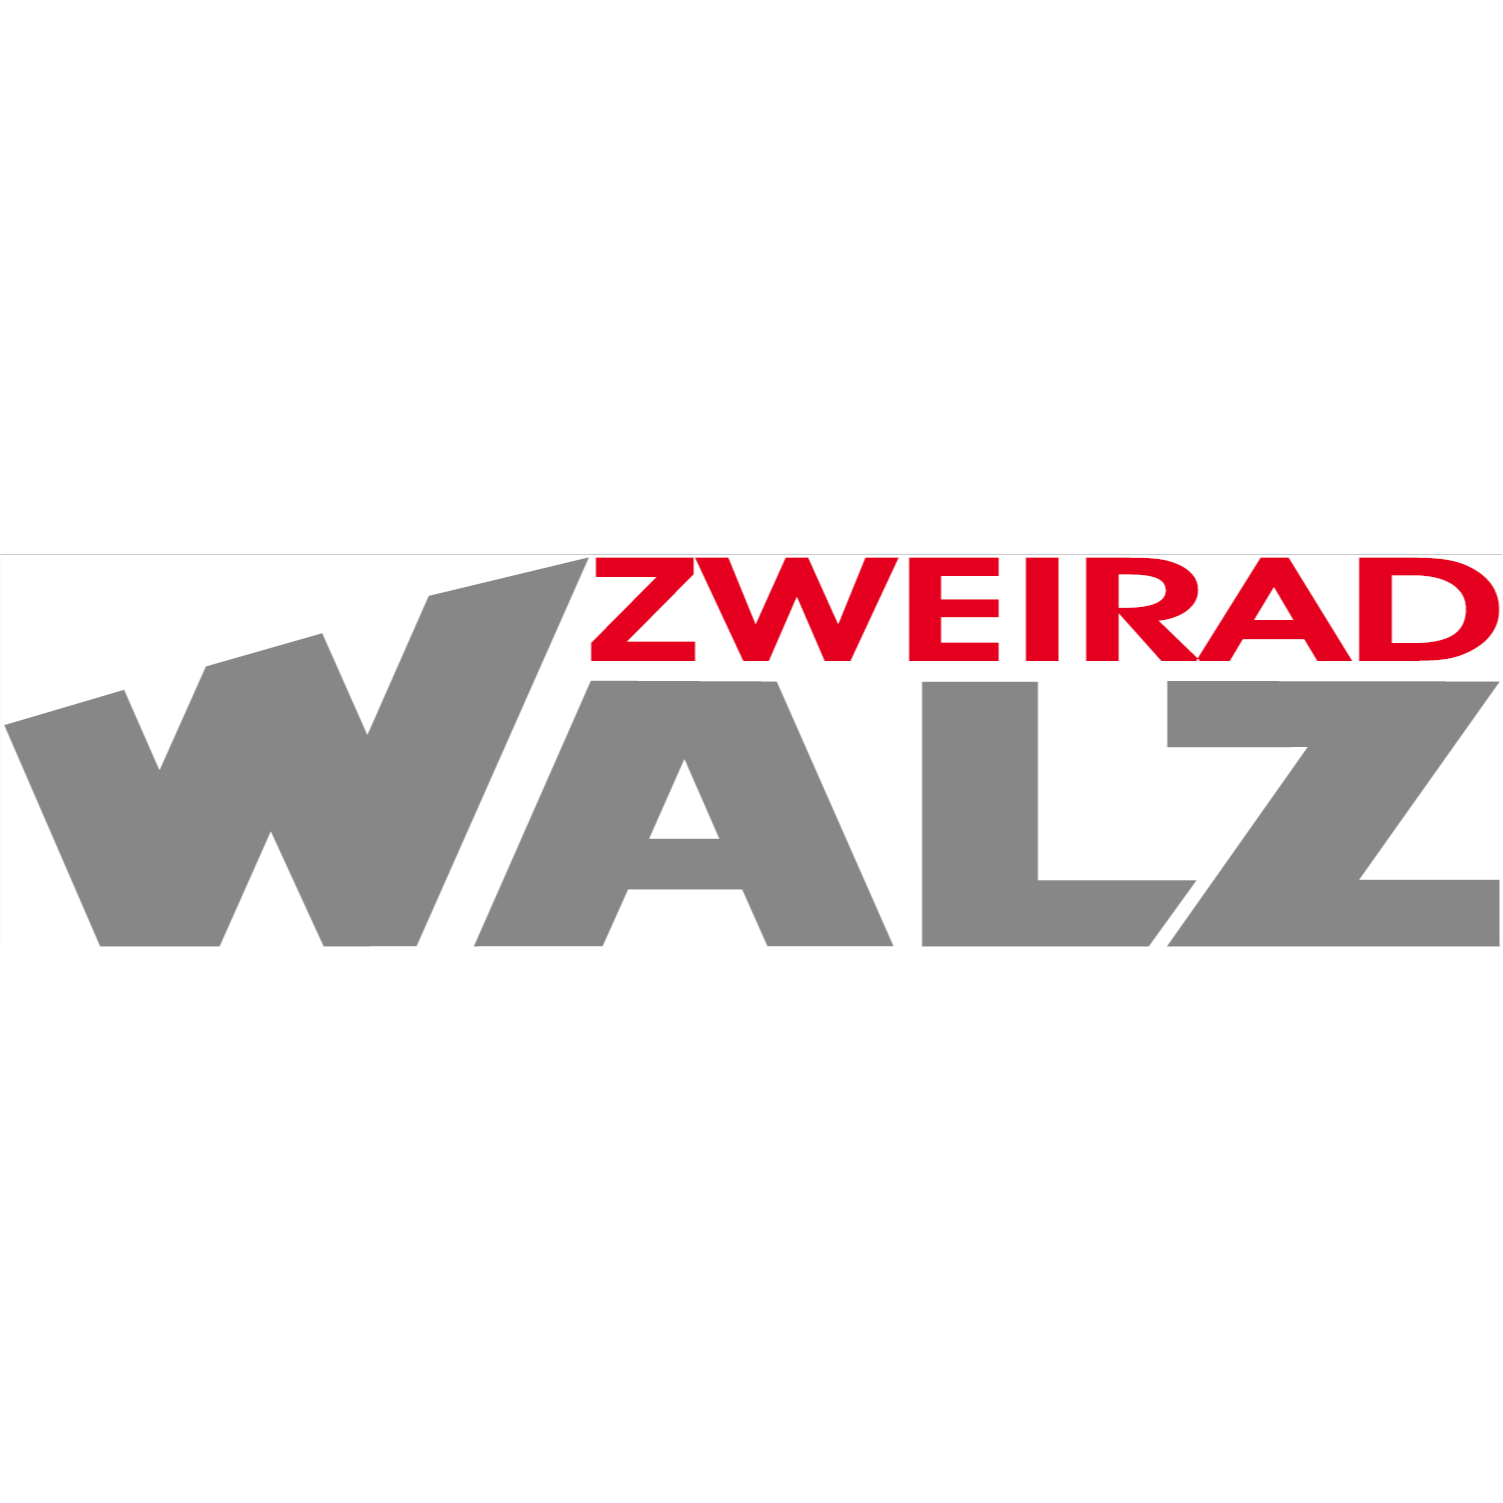 Zweirad Walz OHG in Stuttgart - Logo